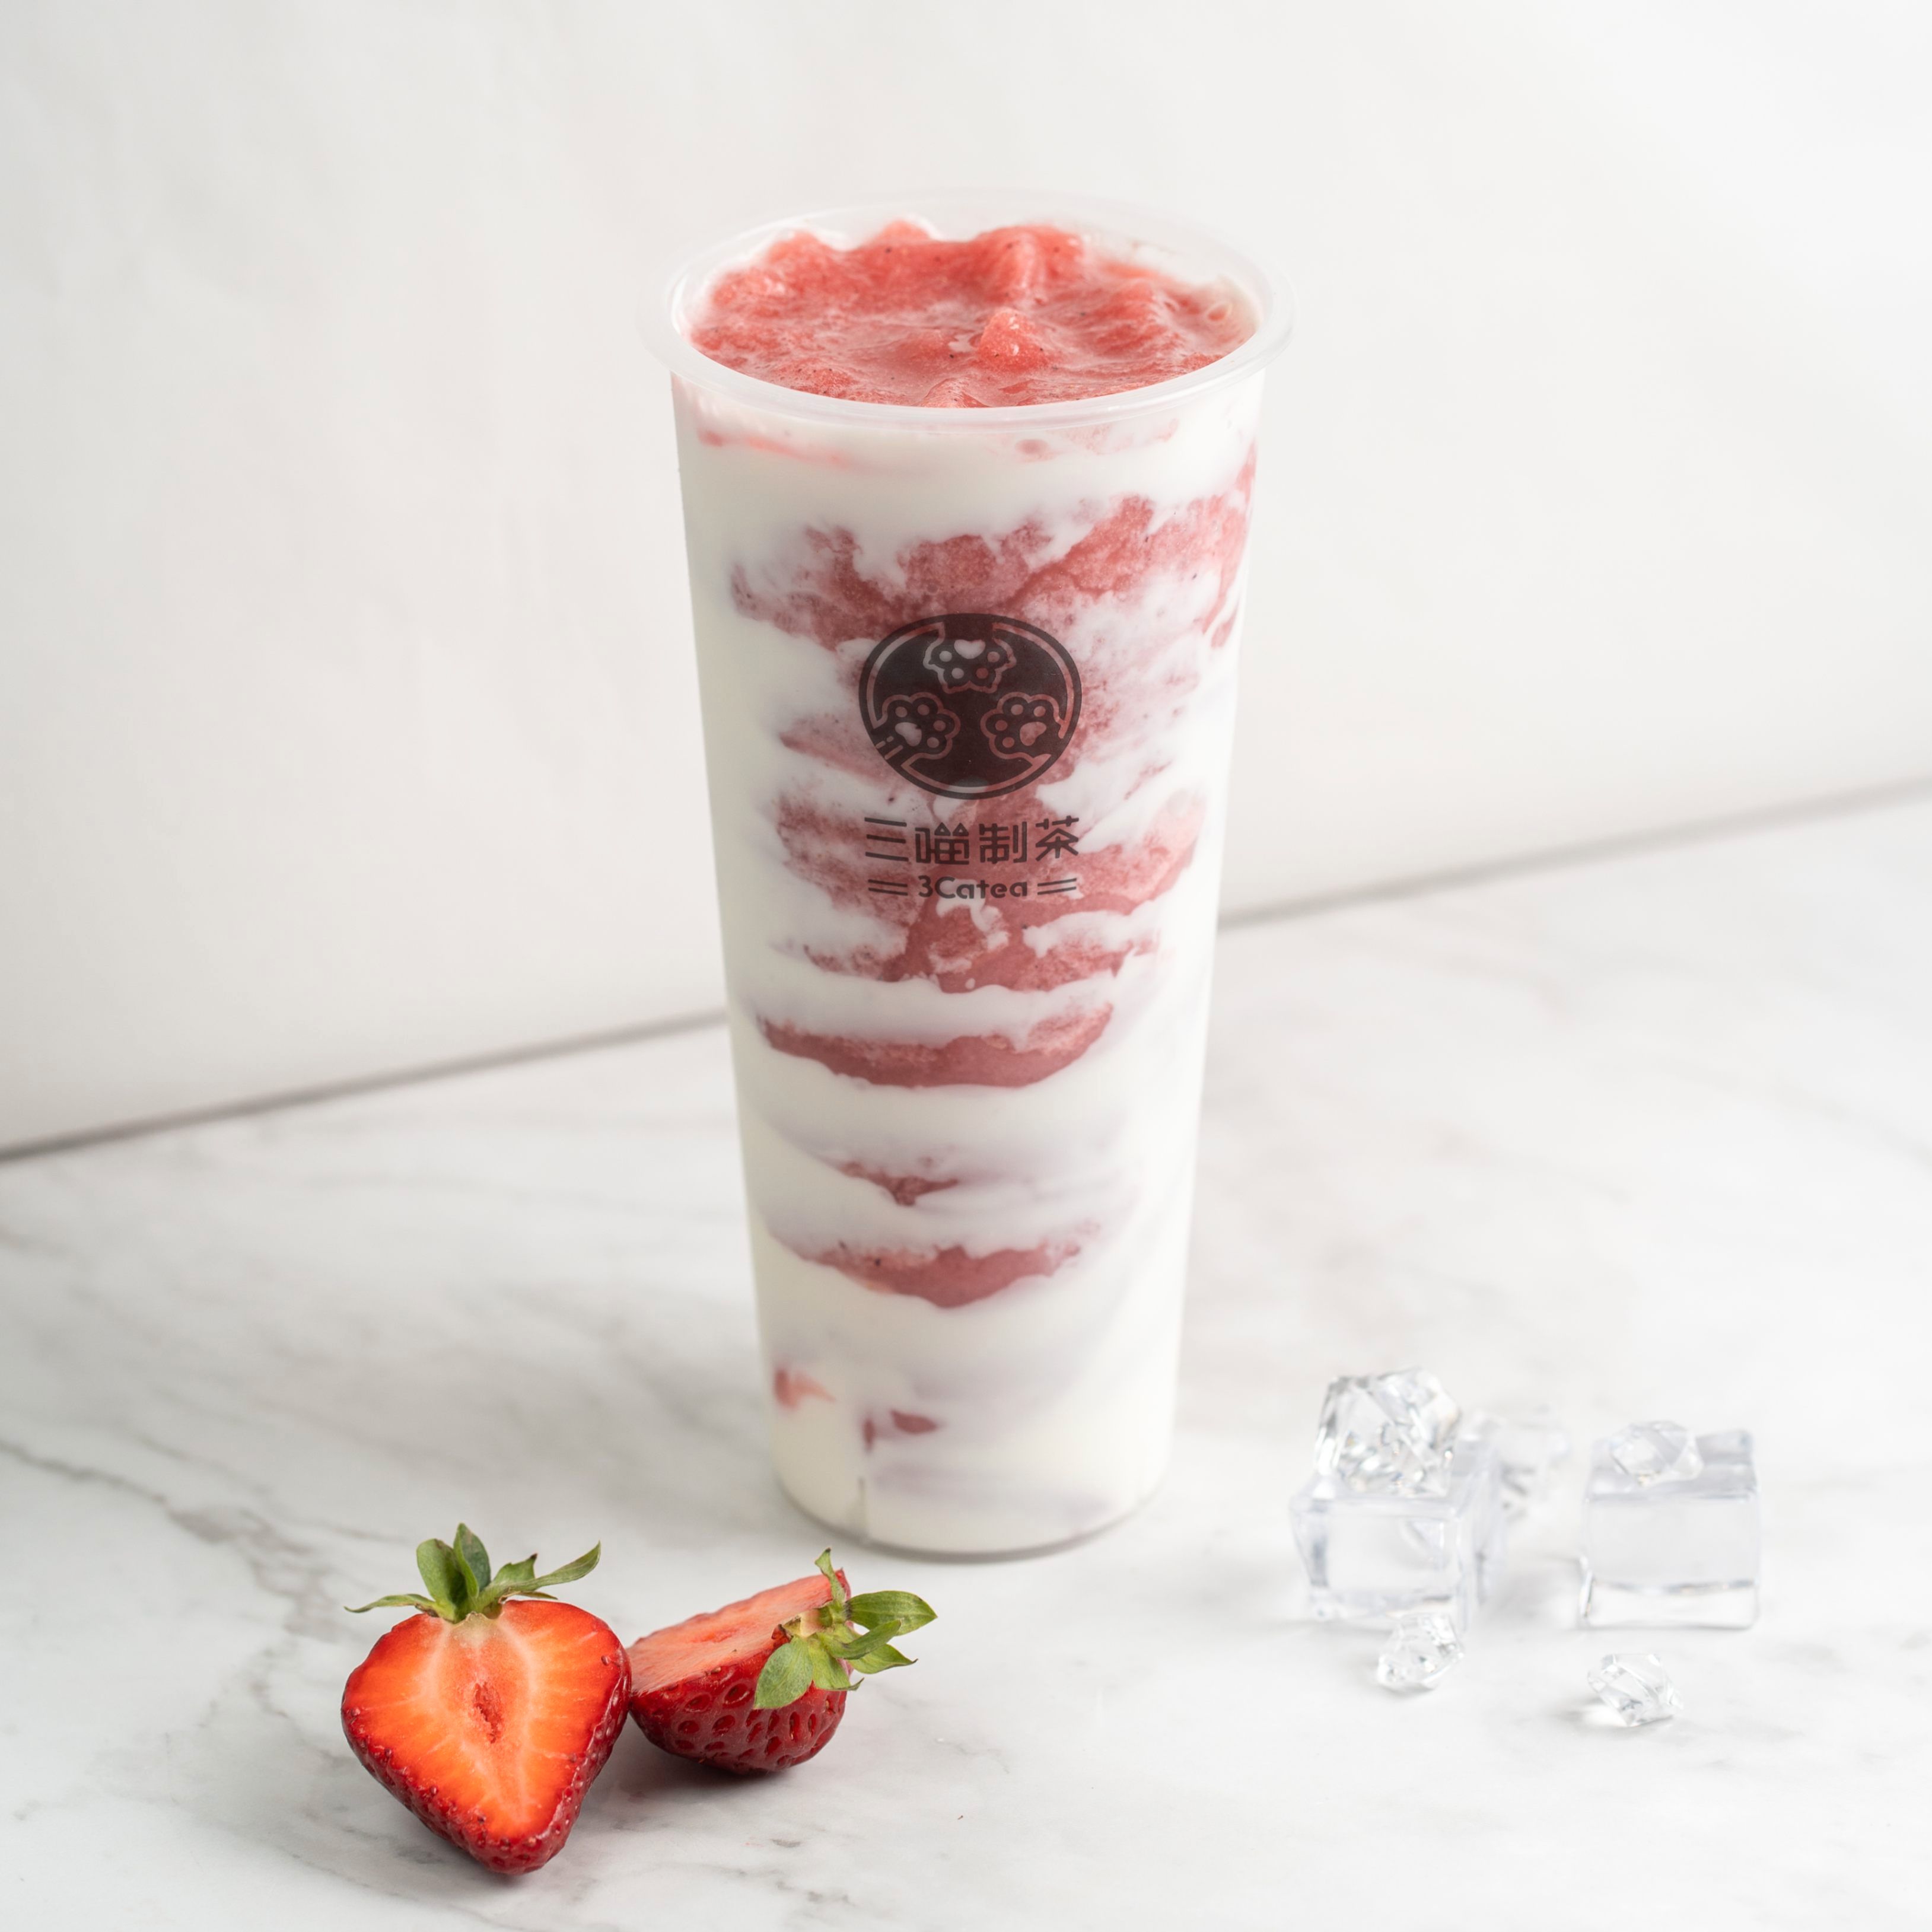 yogurt strawberry